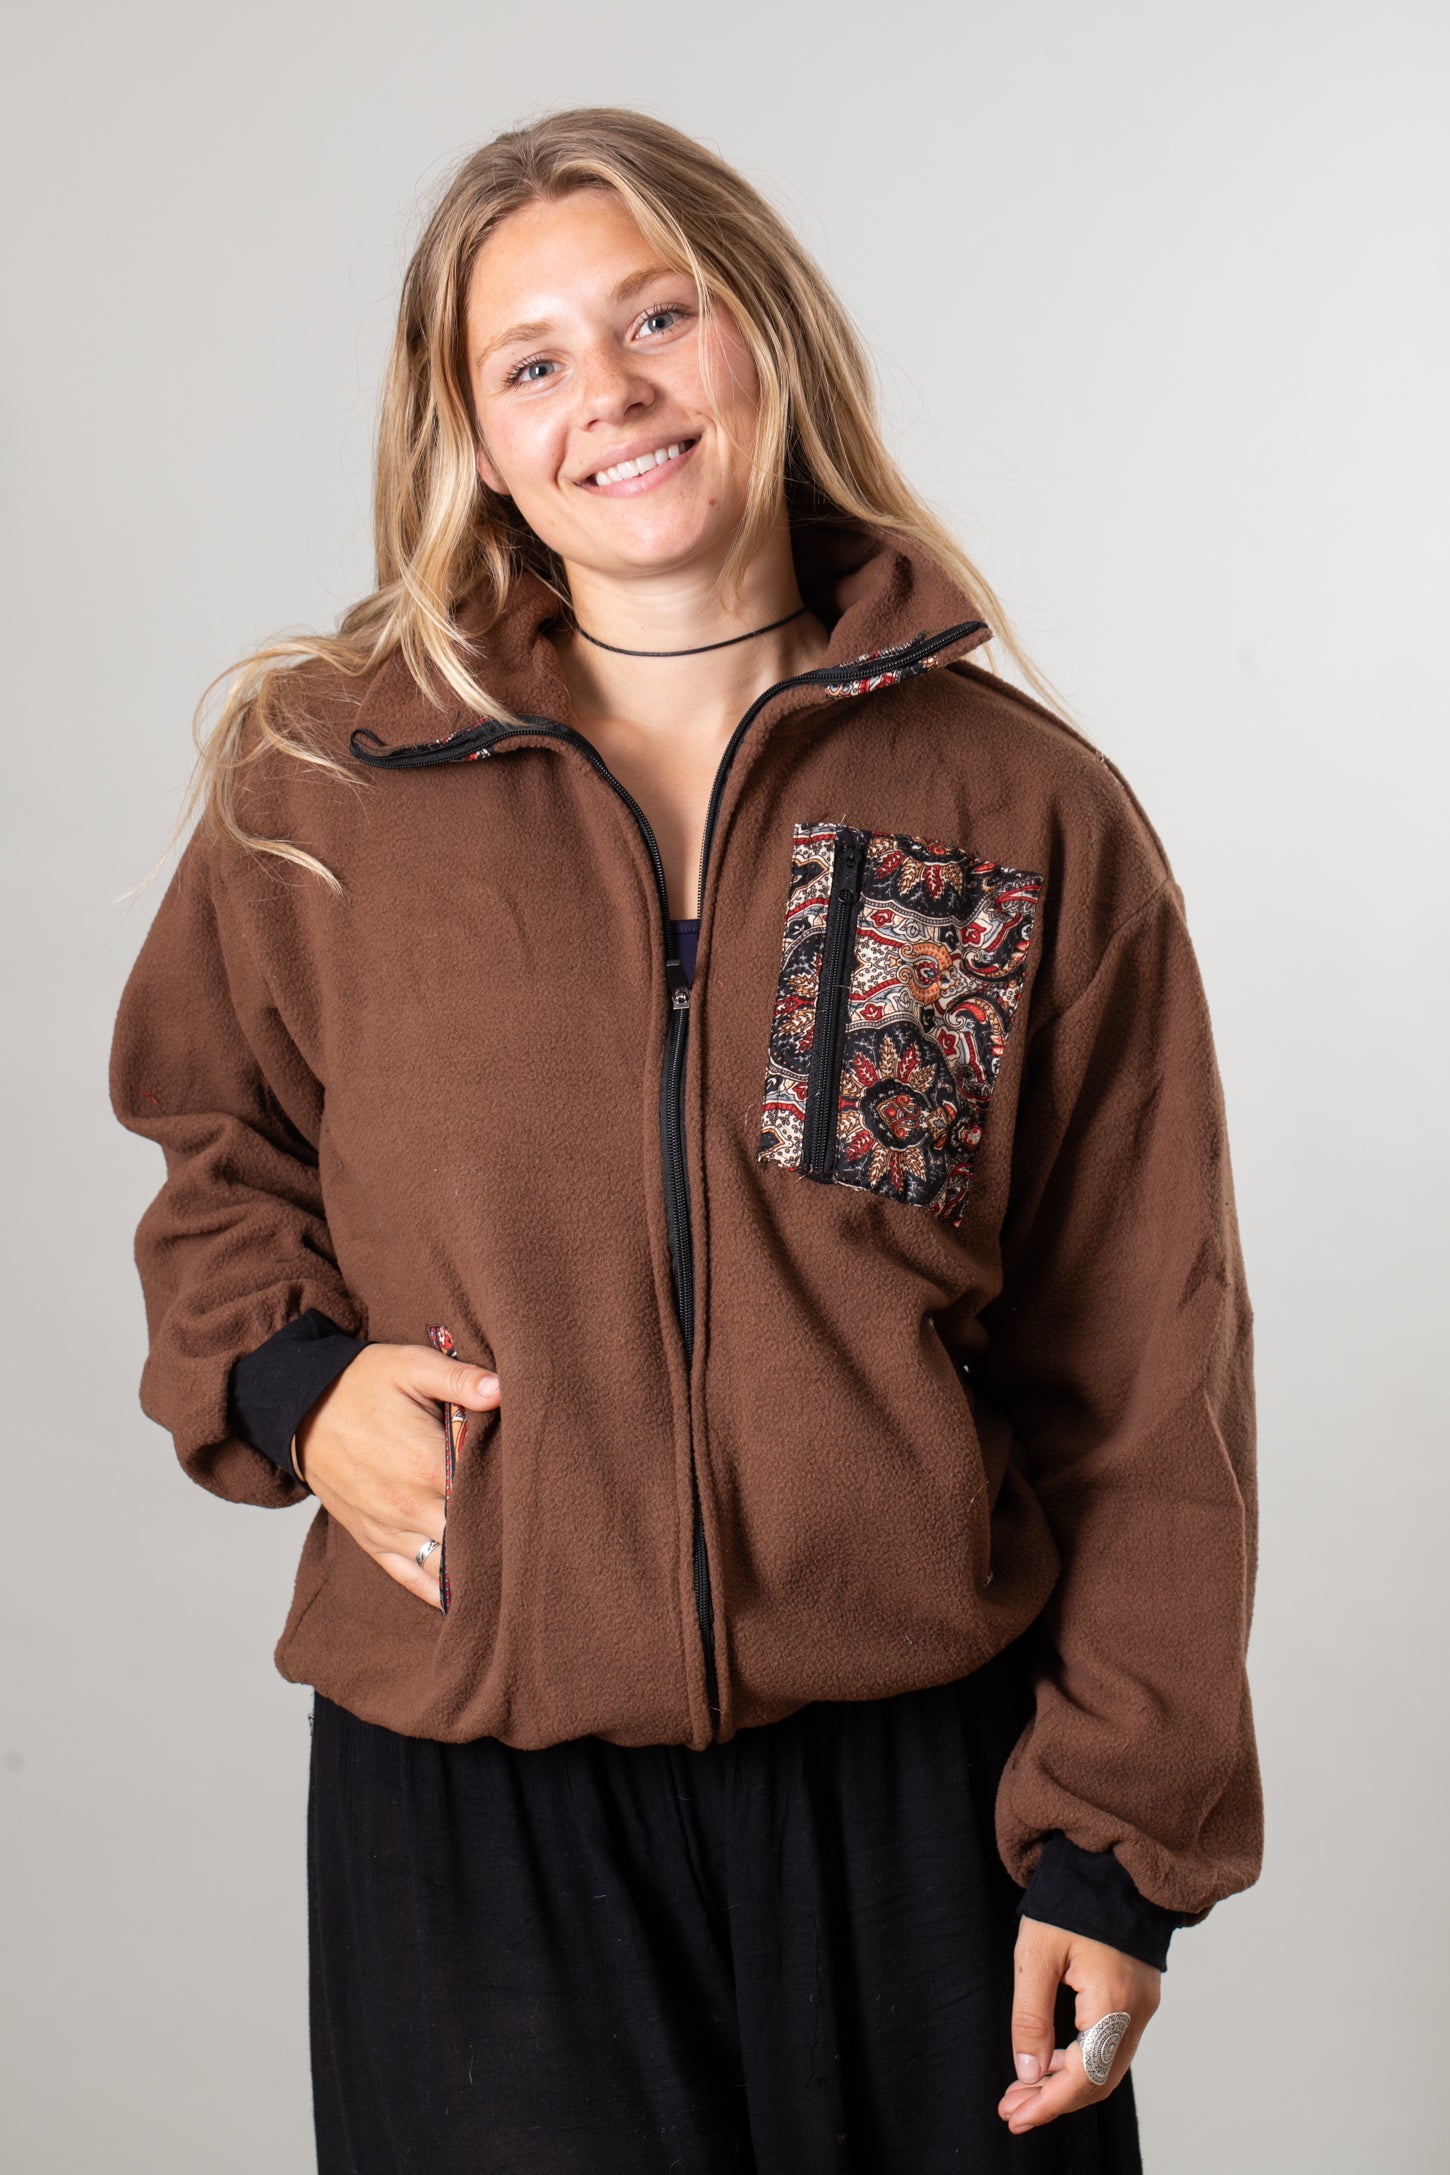 BLESS U/balaclava fleece jacket/size:Lblessu